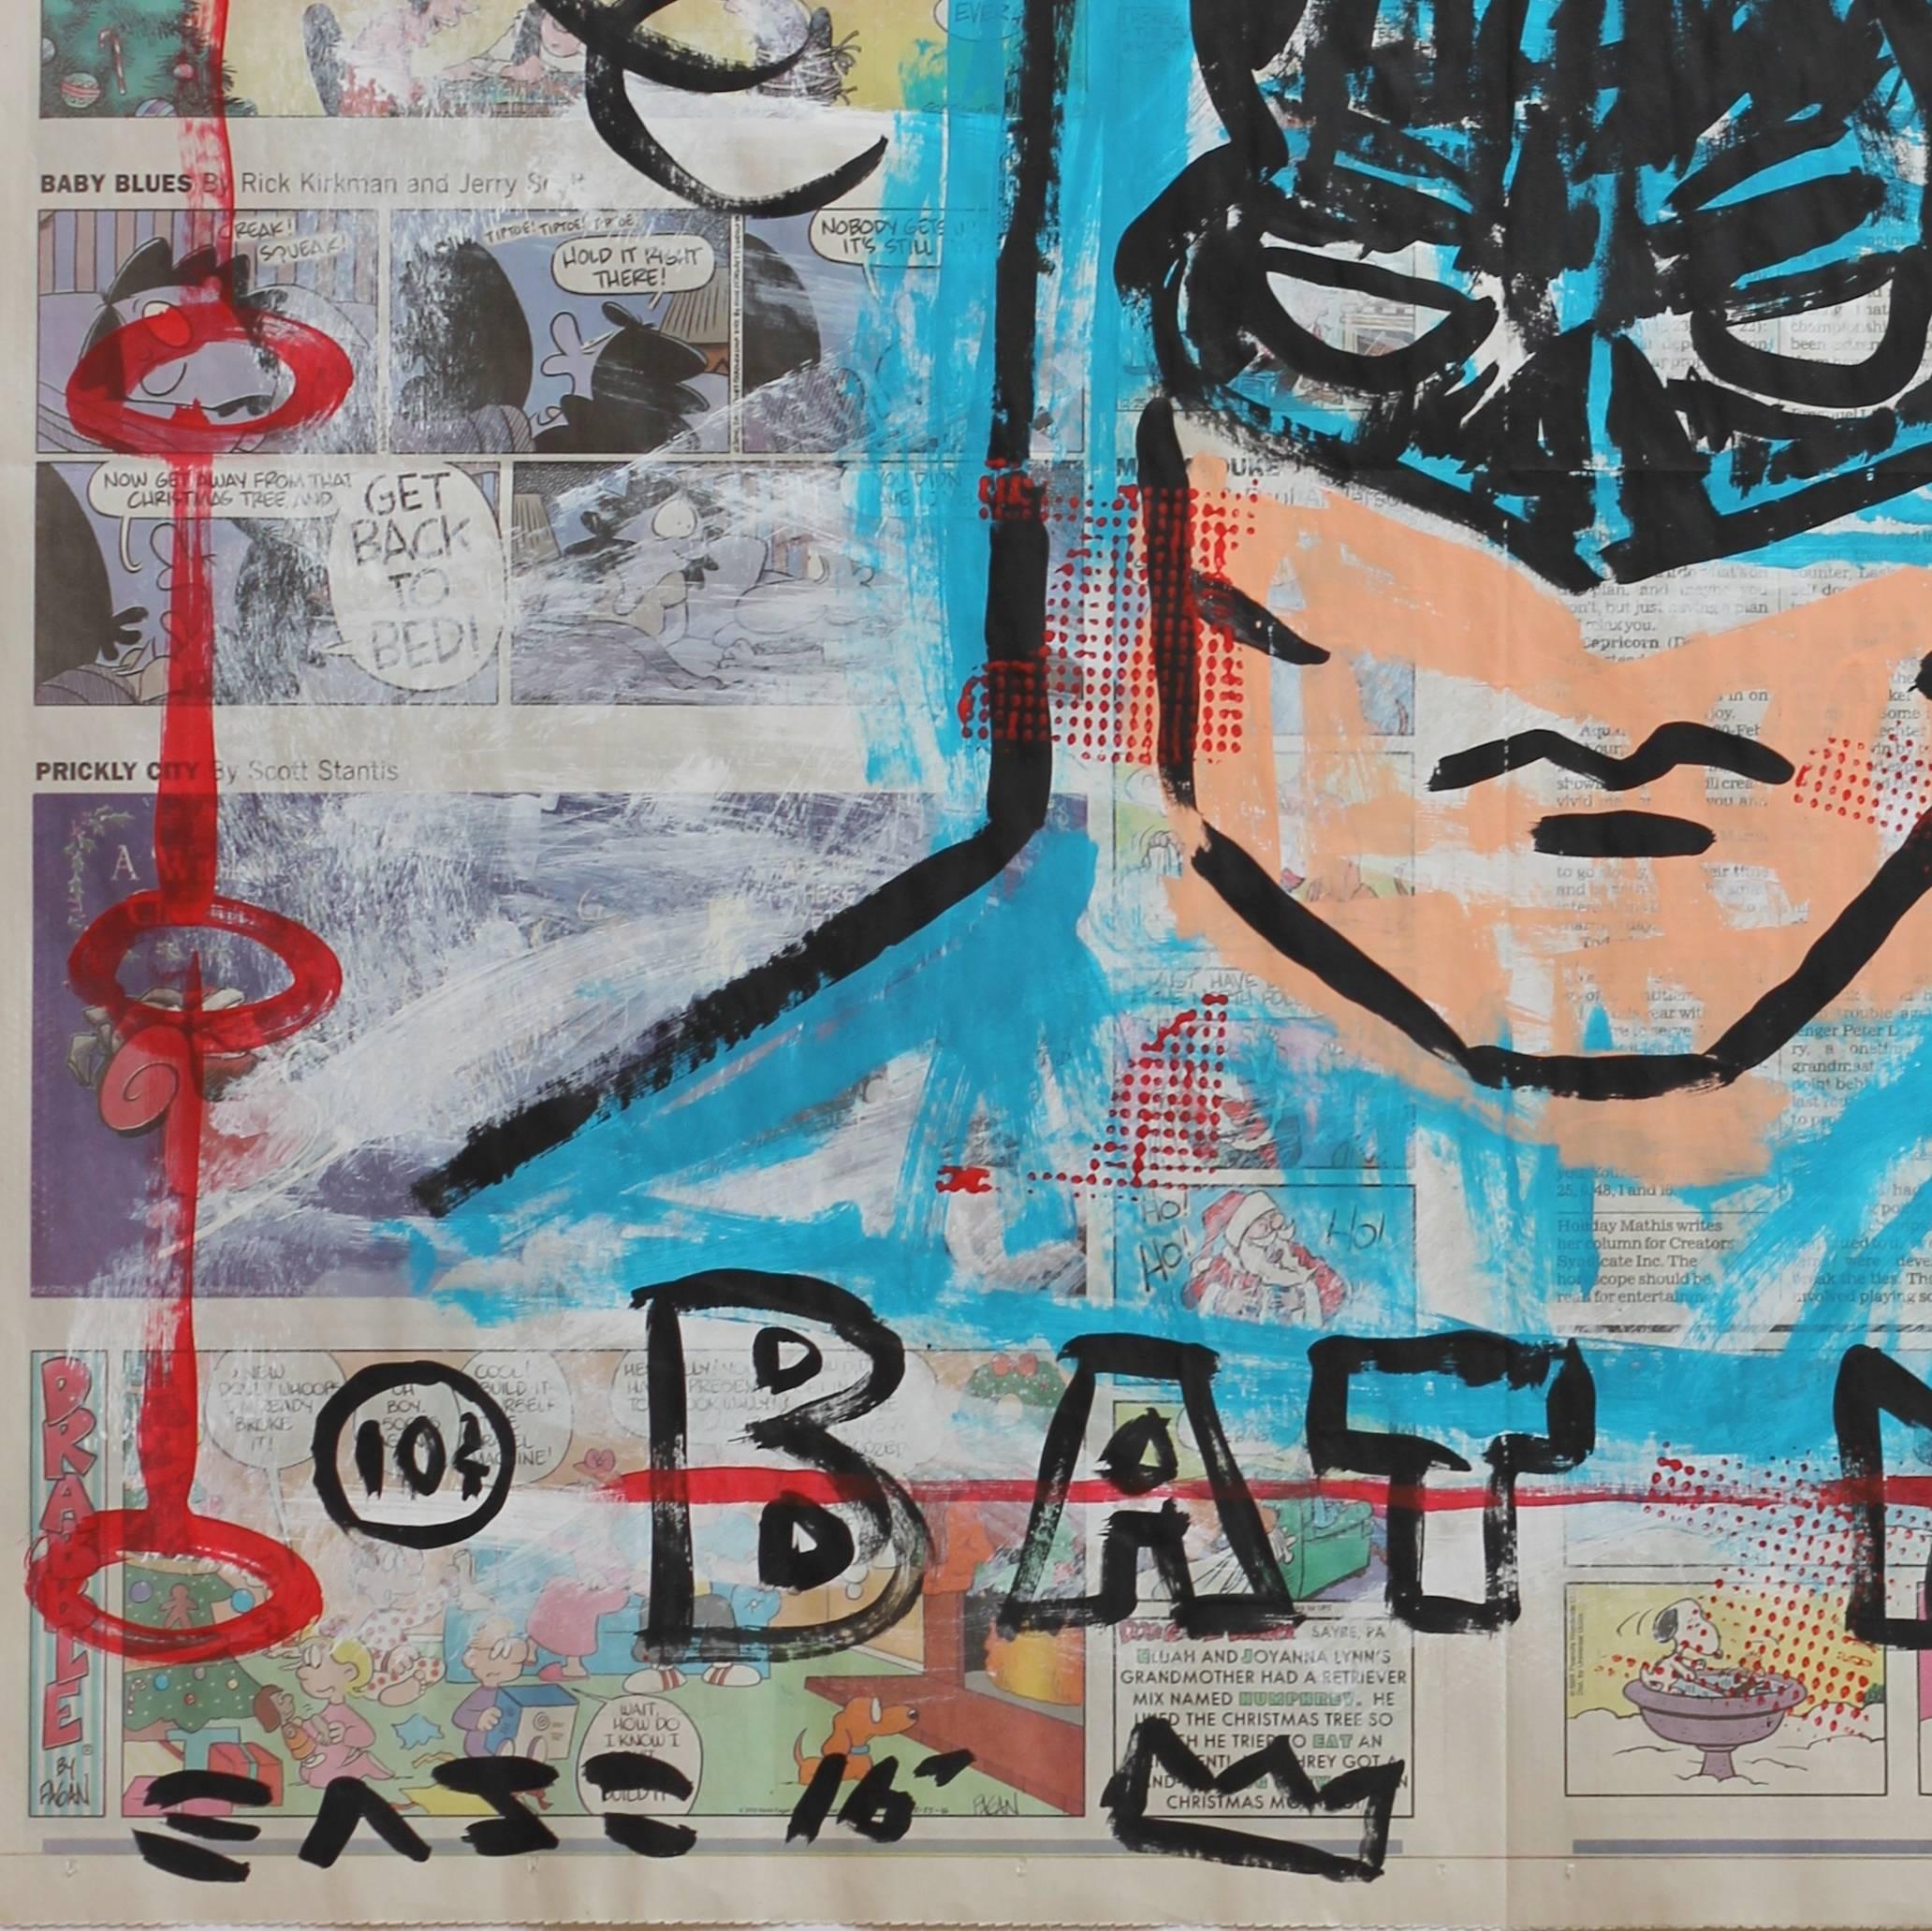 The Bat Man - Street Art Painting by Gary John